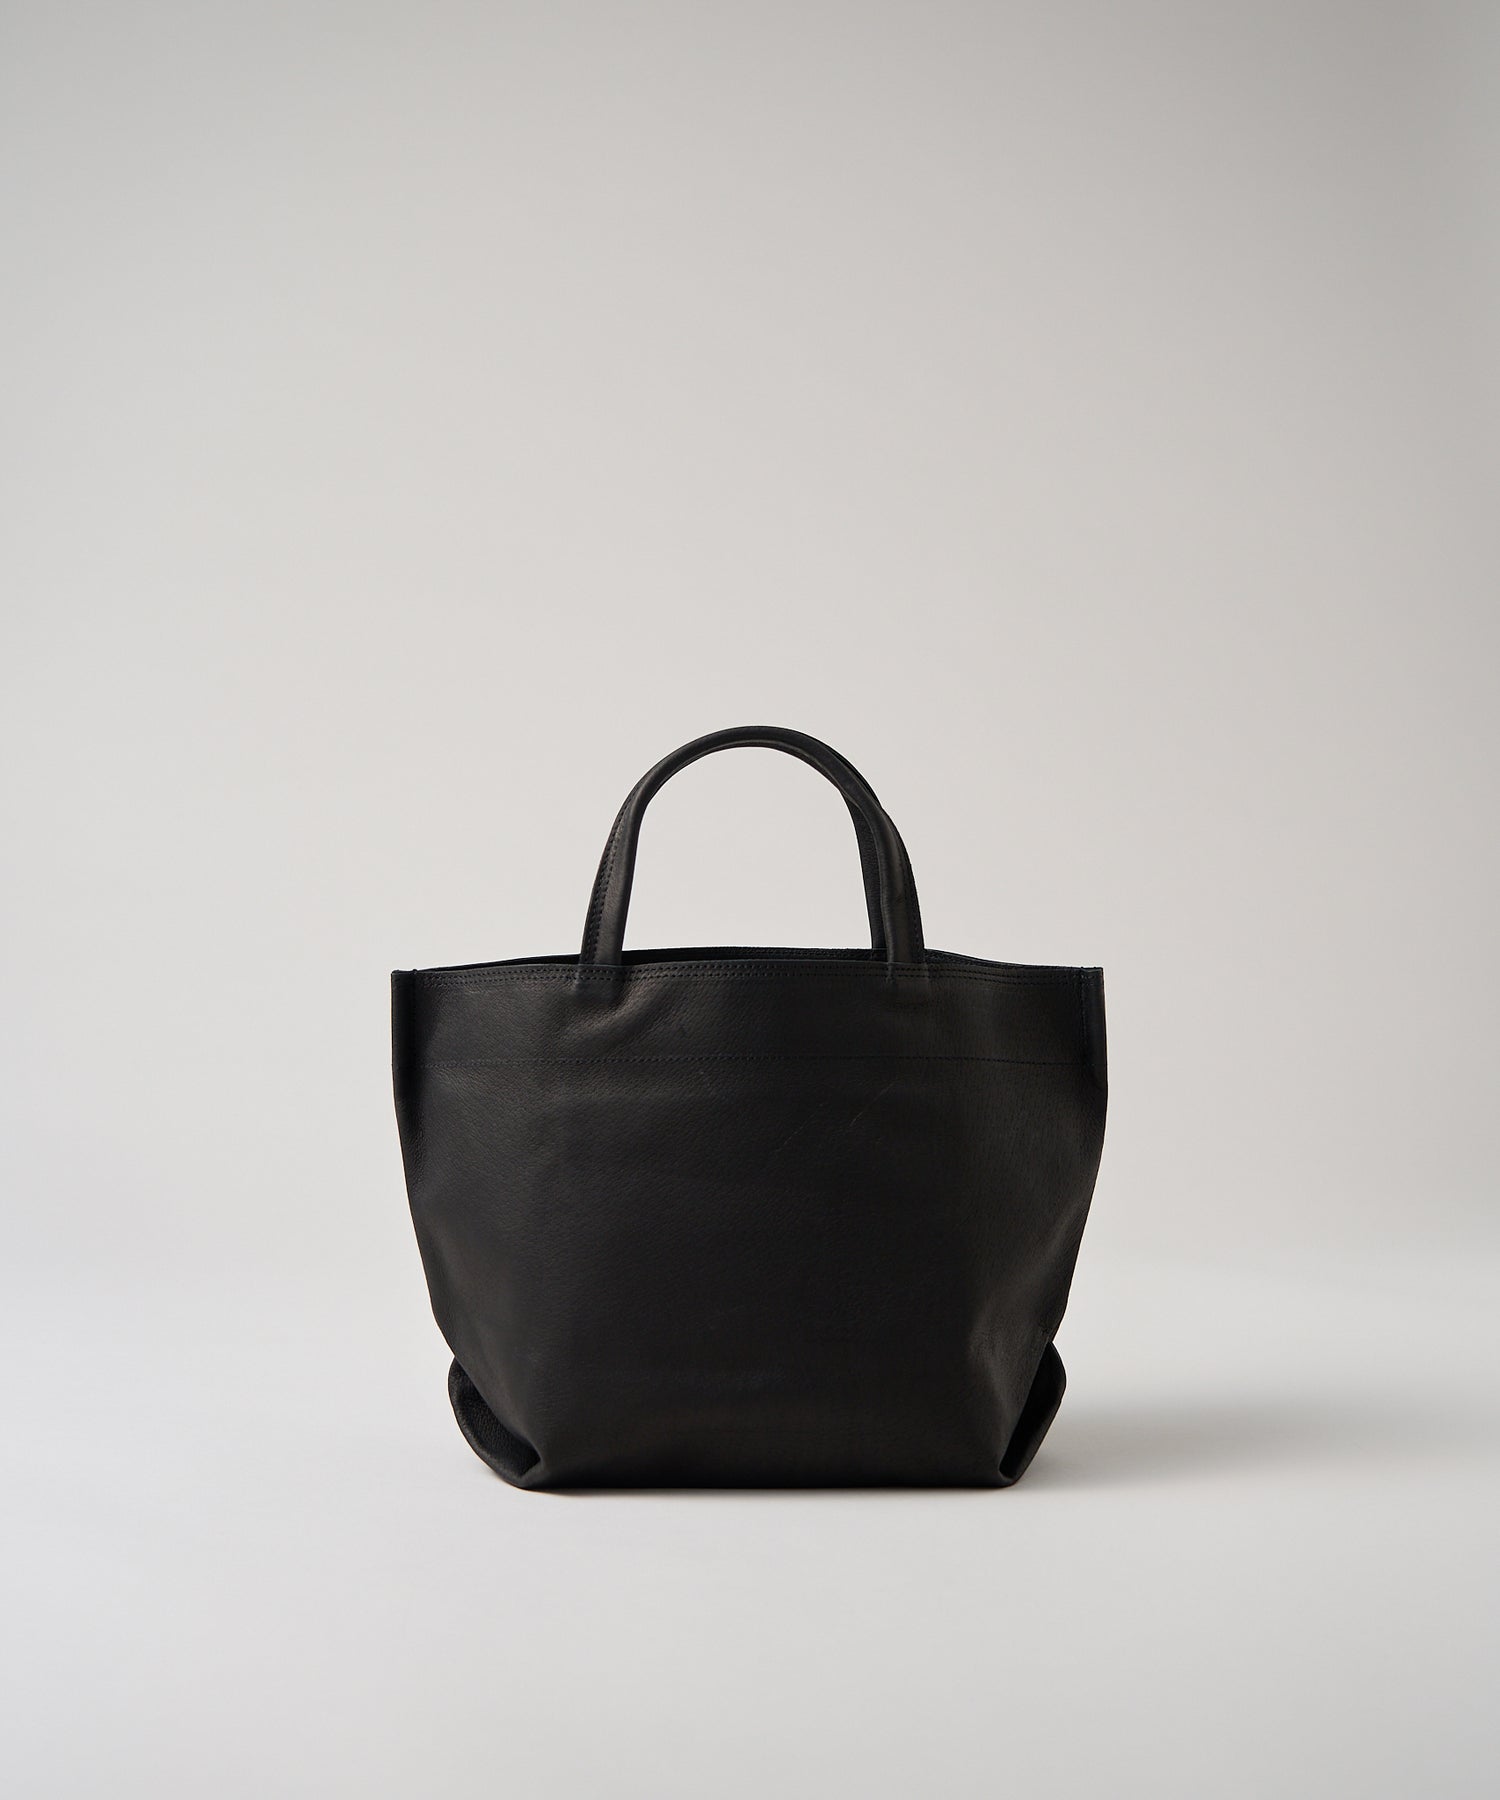 REN】《トートバッグ》シンプルで軽い、手持ちサイズのレザーバッグ。